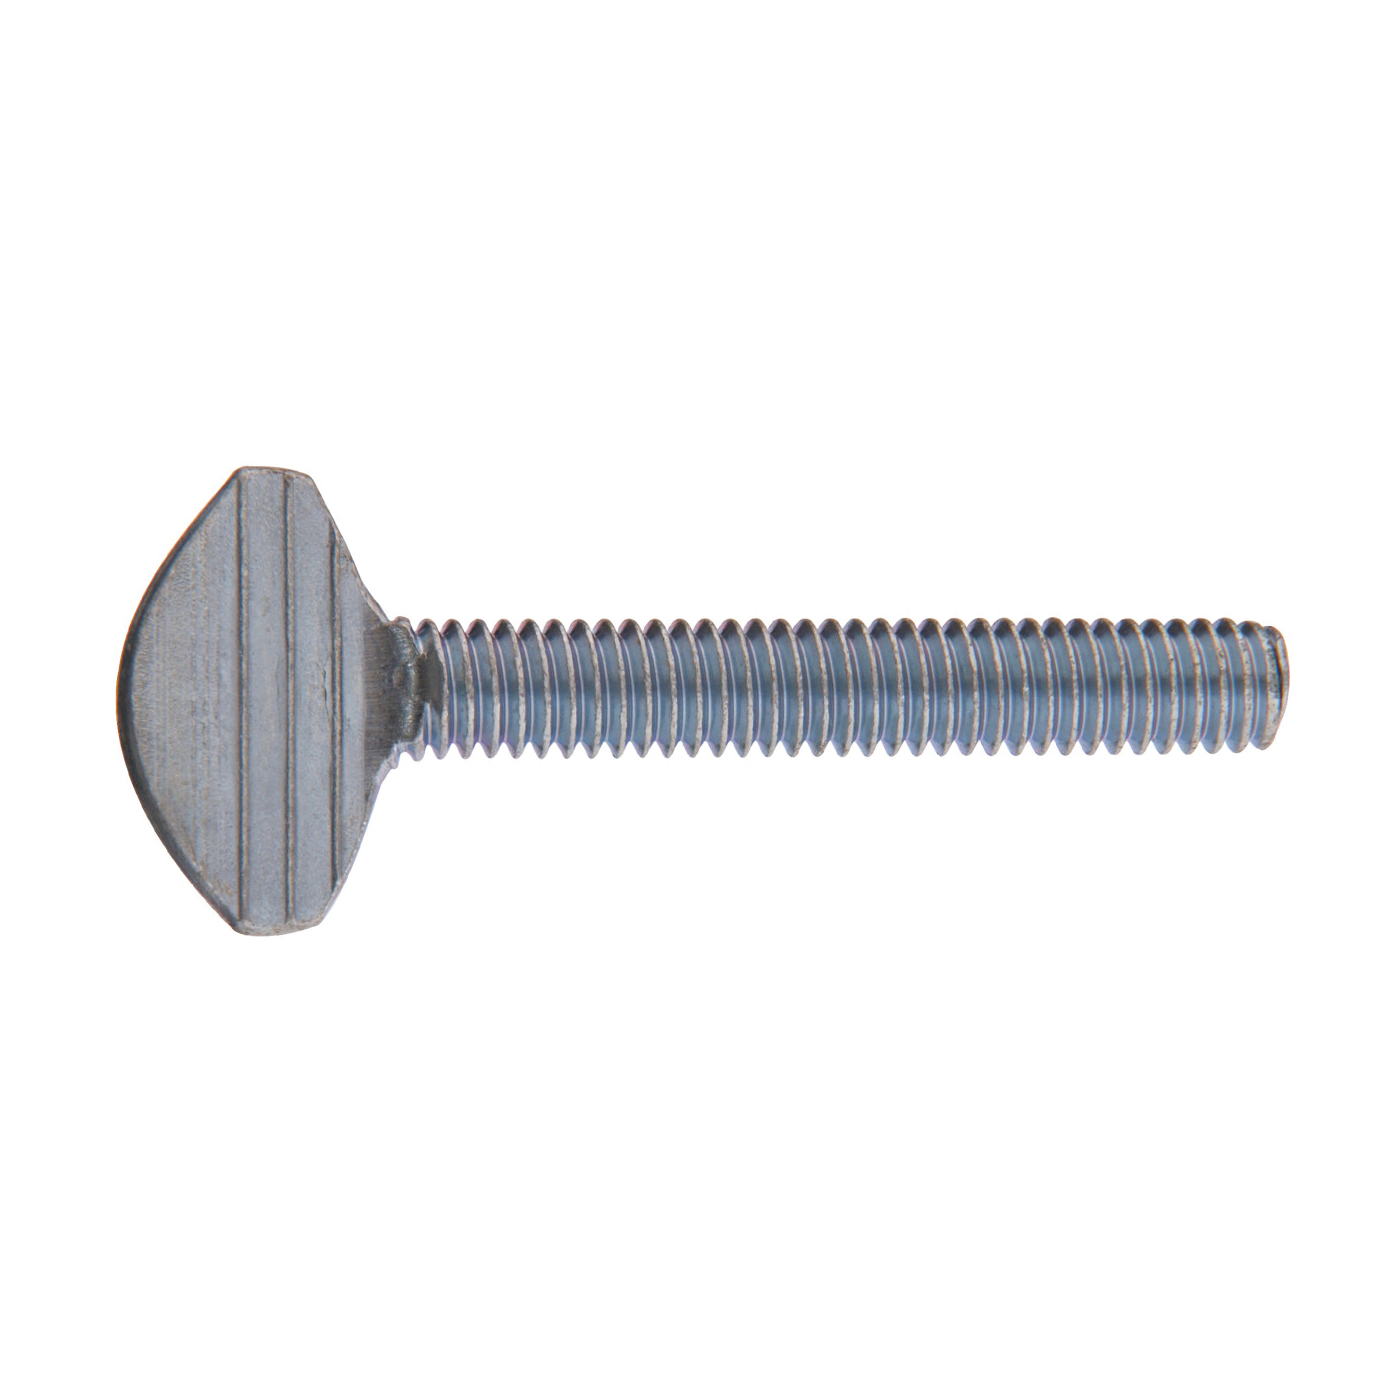 880953 Machine Screw, 1/4-20 Thread, 1 in L, Coarse Thread, Blunt Point, Steel, Zinc-Plated